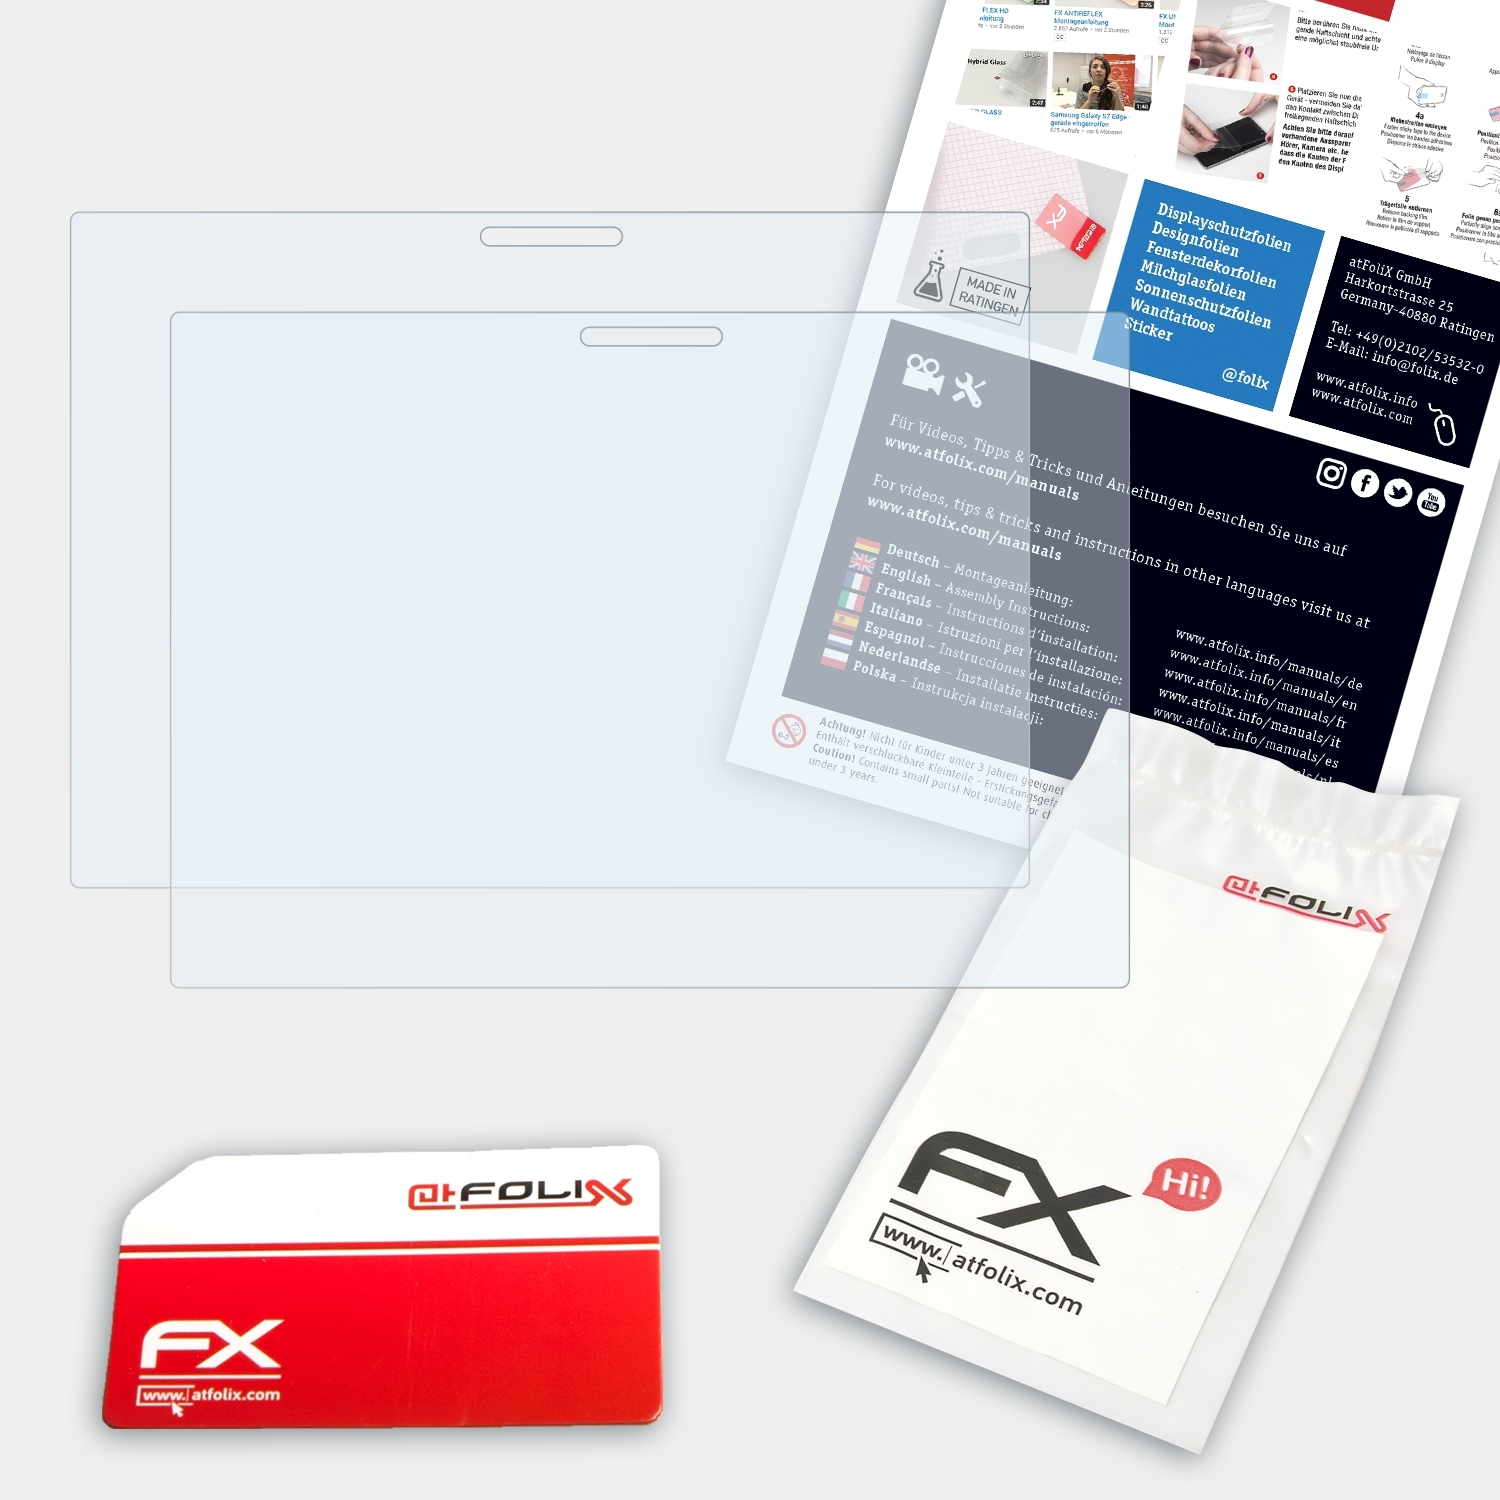 2x FX-Clear Miix Displayschutz(für Lenovo IdeaPad ATFOLIX 630)